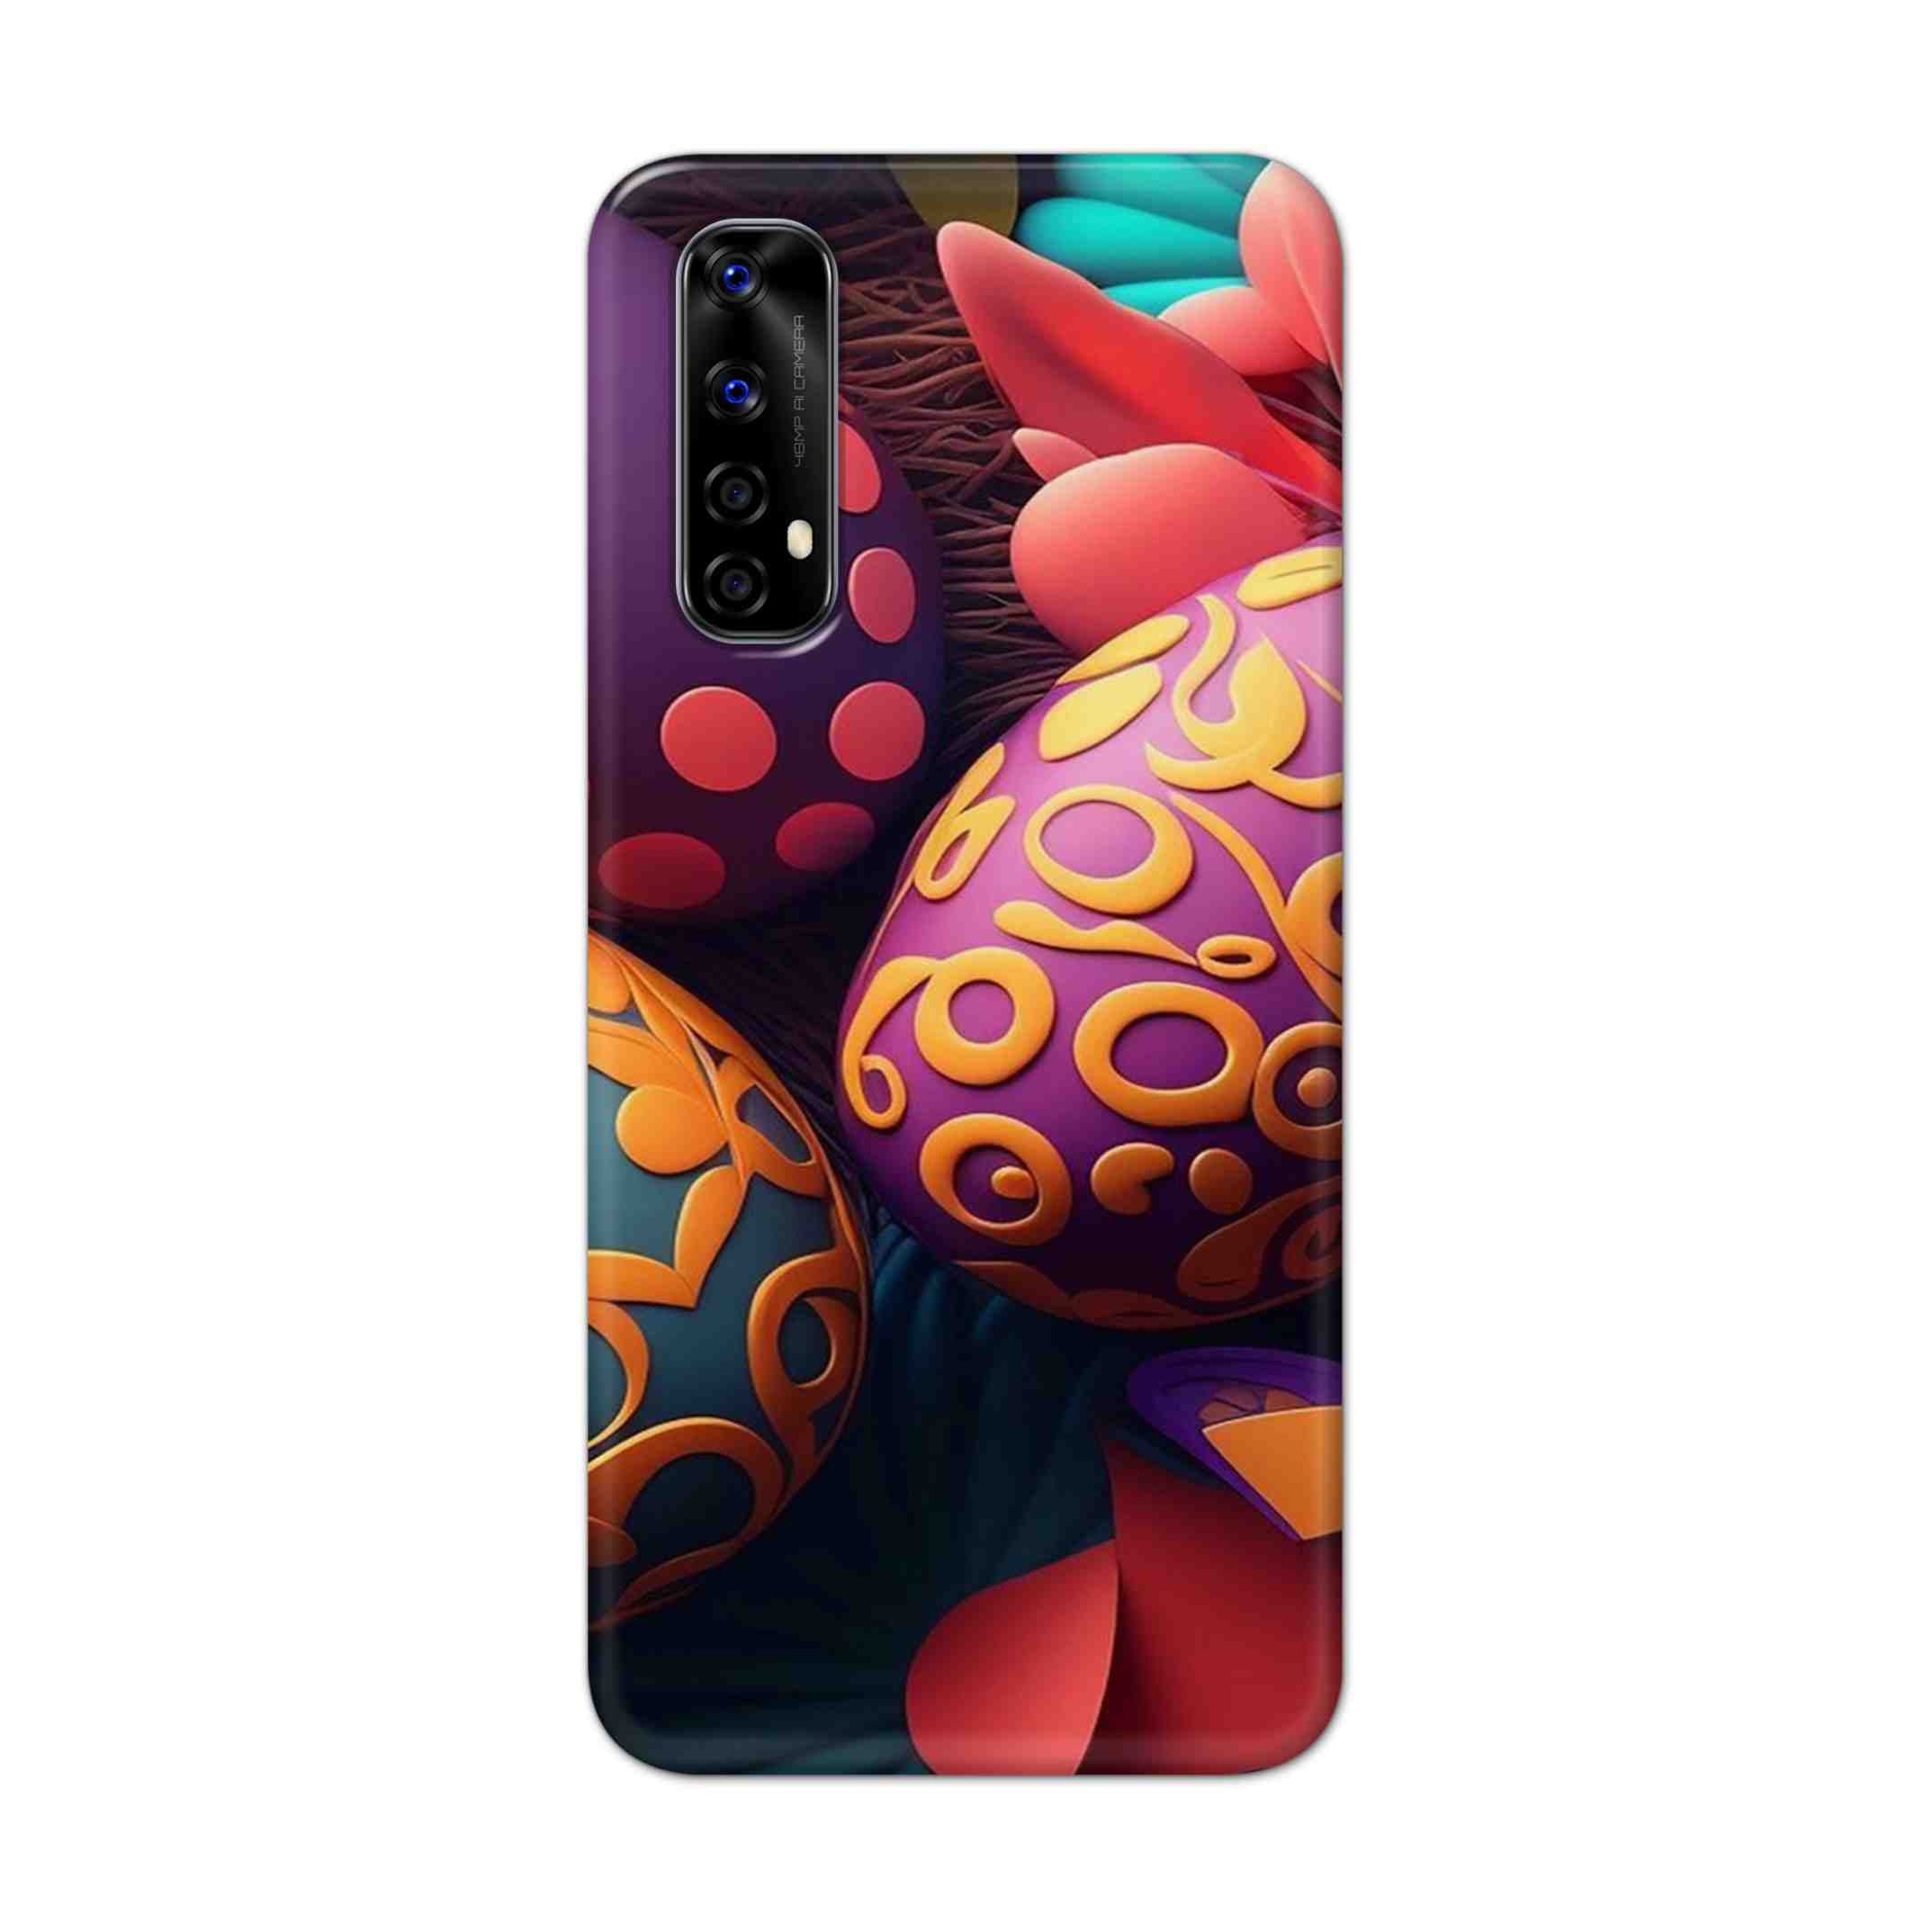 Buy Easter Egg Hard Back Mobile Phone Case Cover For Realme Narzo 20 Pro Online